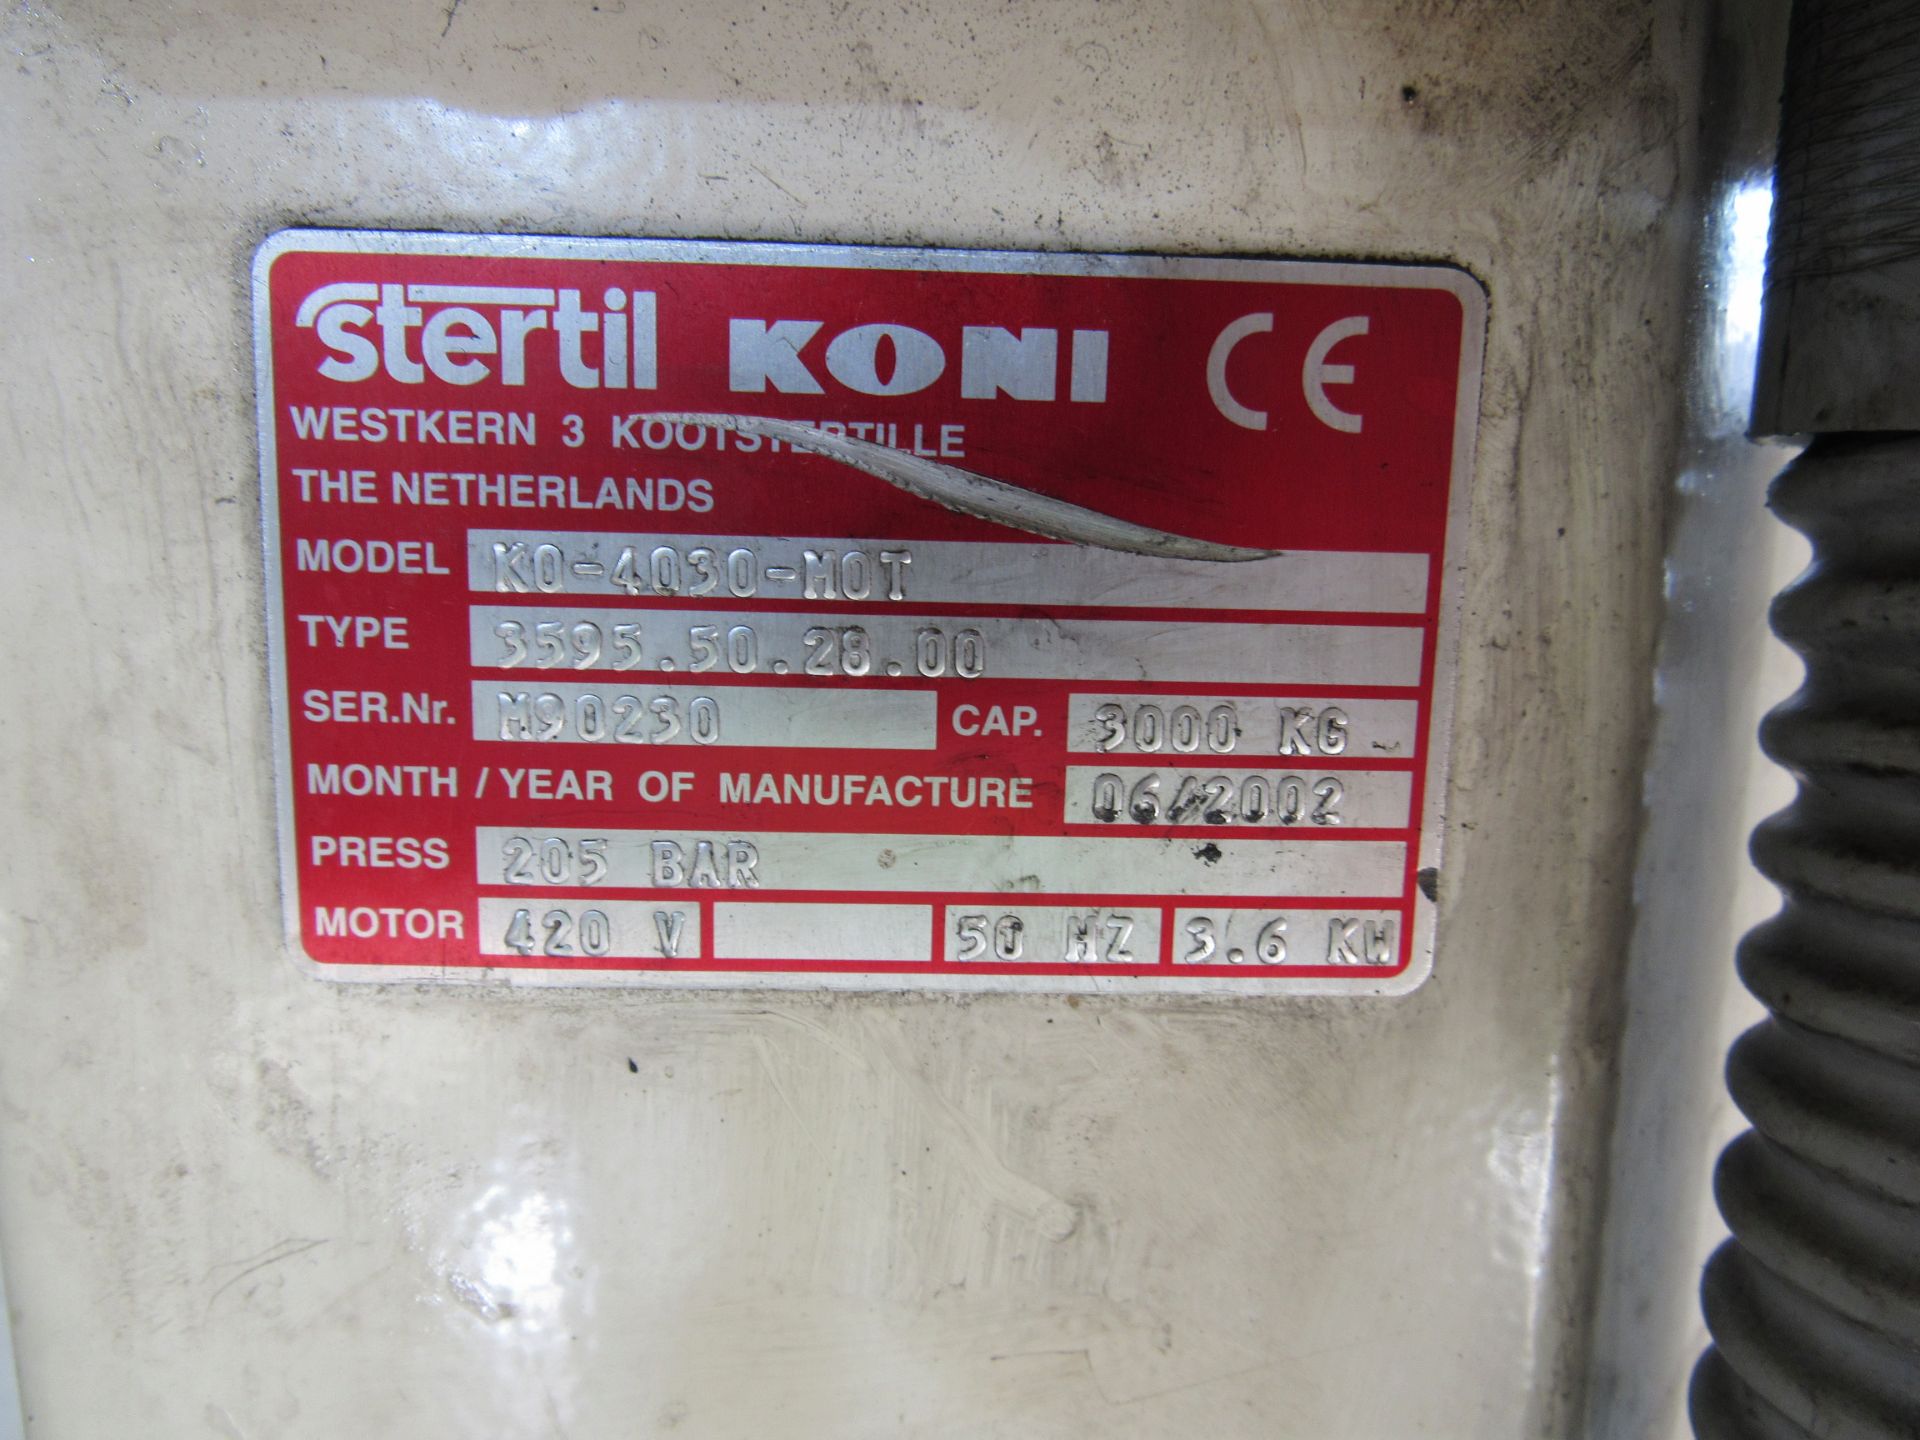 Stertil Koni KO-4030-MOT 4 Post Vehicle Lift, 3000kg, M90230, 420v, 06/2002 with Jacking Beam - Image 5 of 7